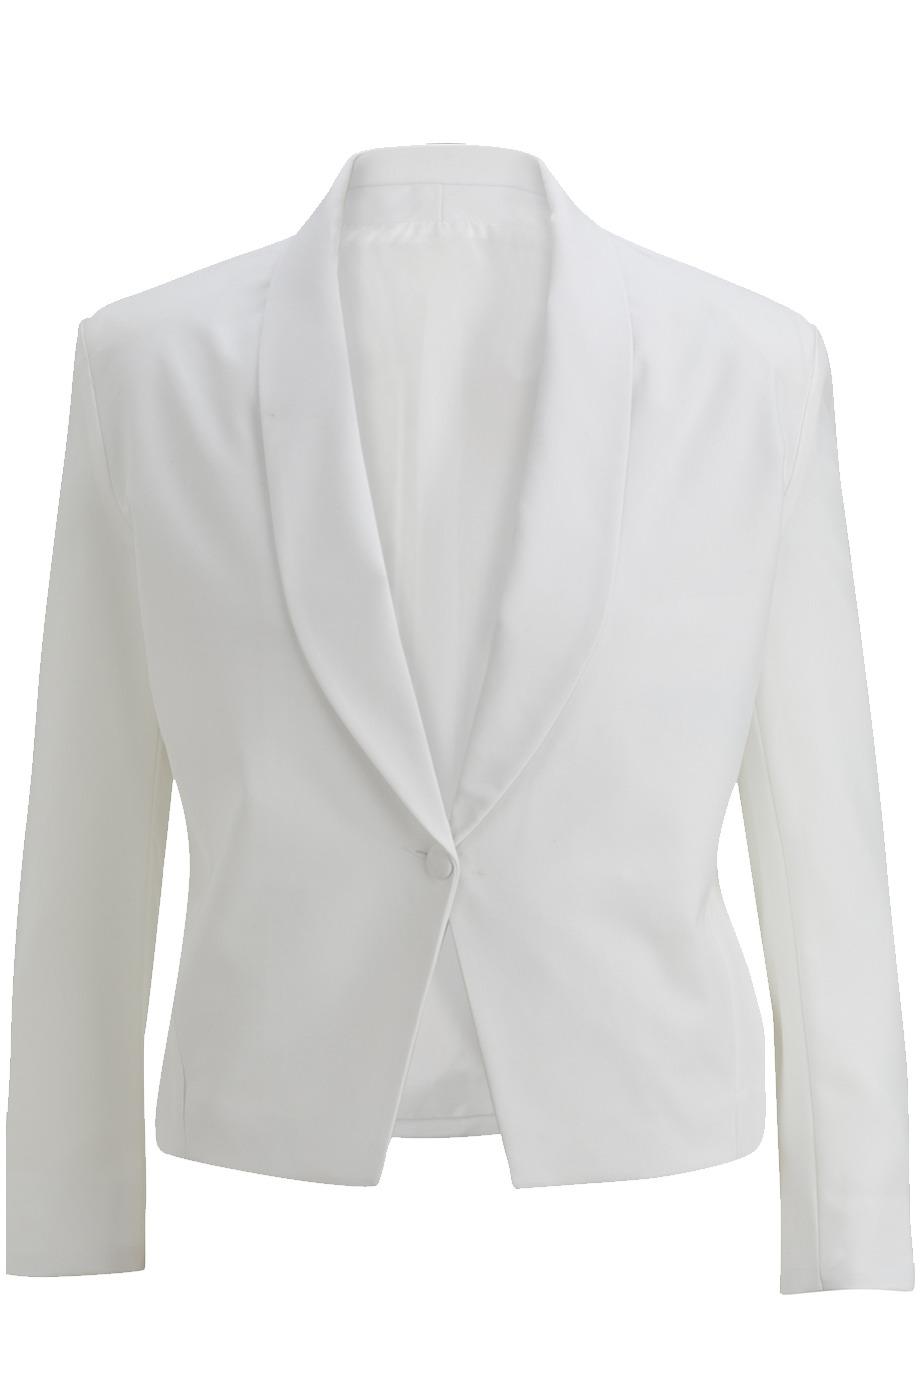 Ladies’ Eton Server Jacket | Legacy School & Career Apparel